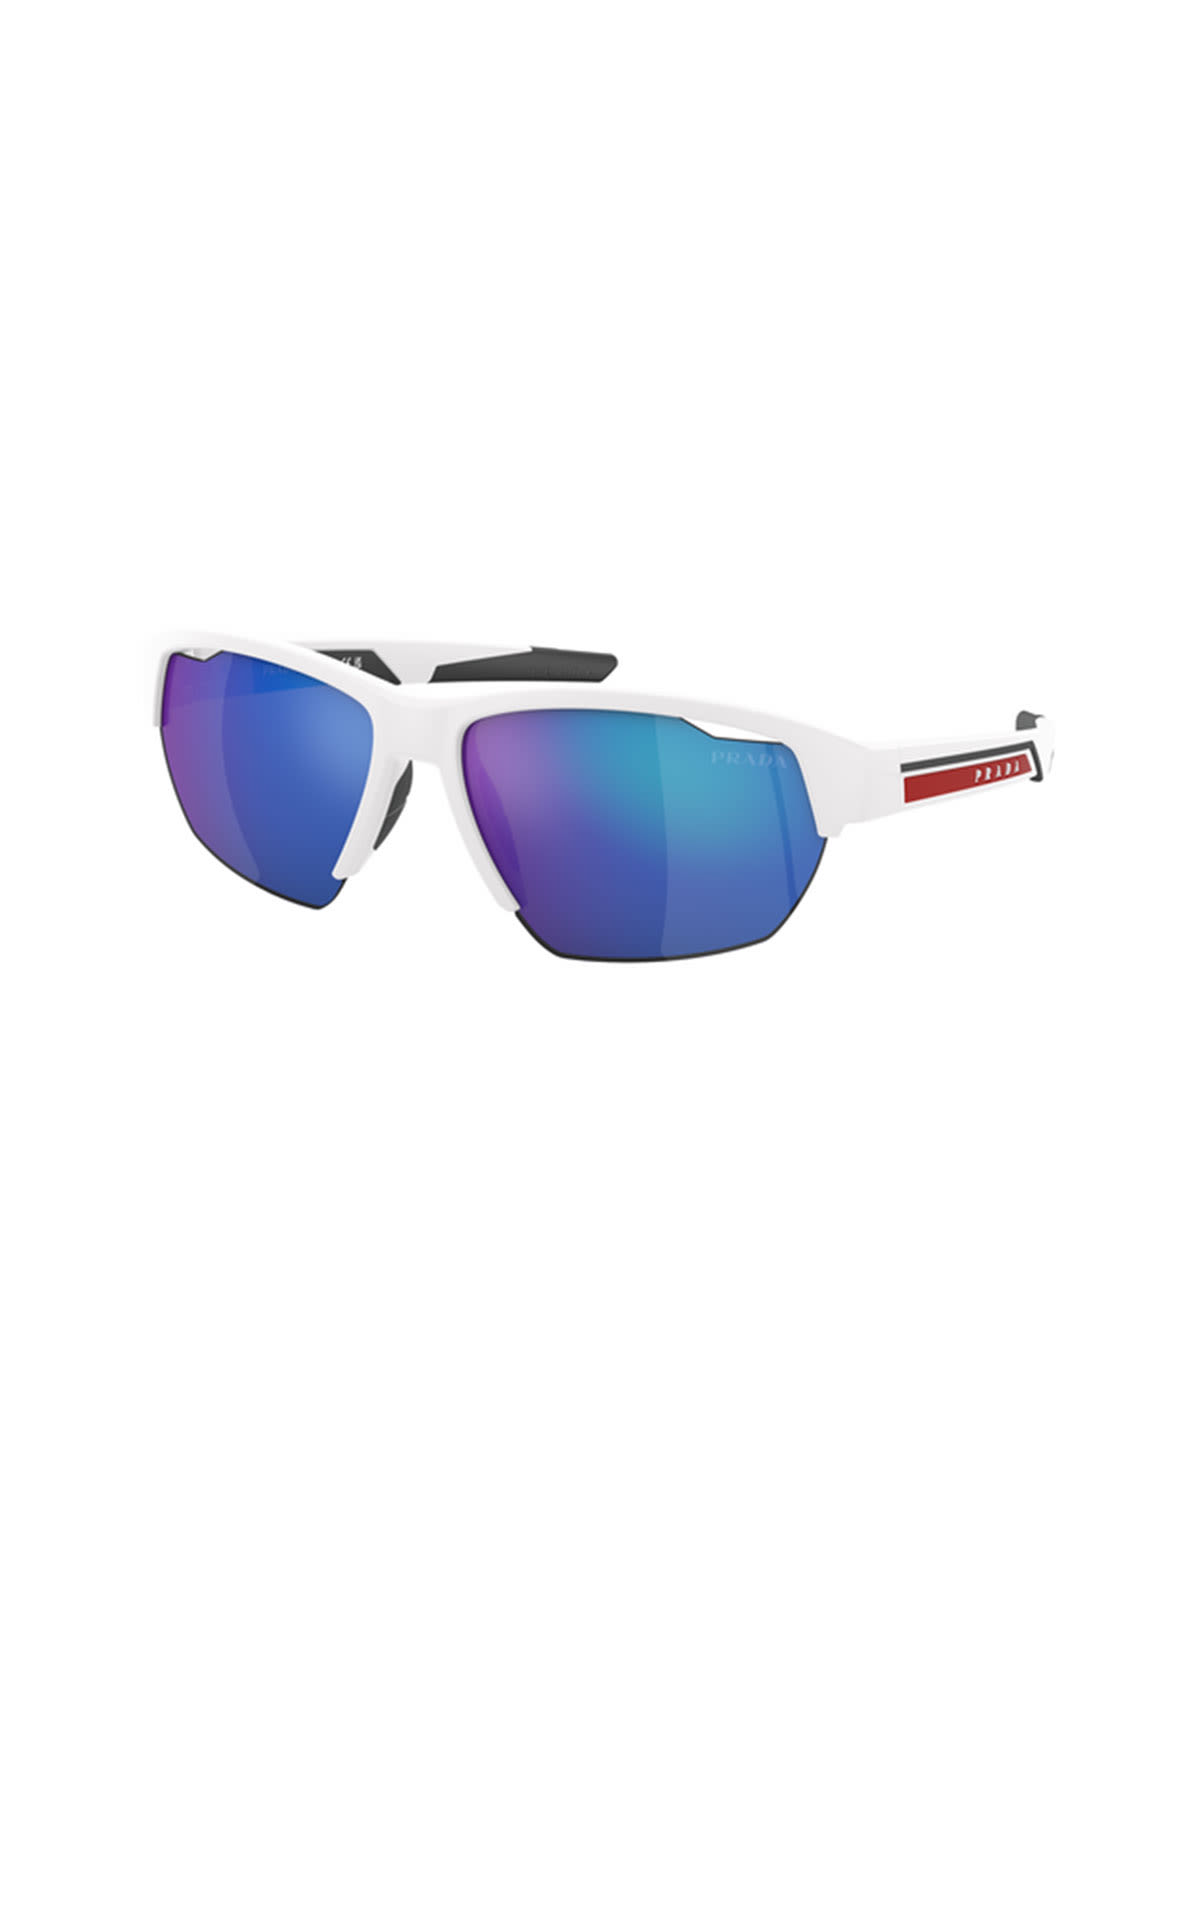 White sport sunglasses Sunglass hut